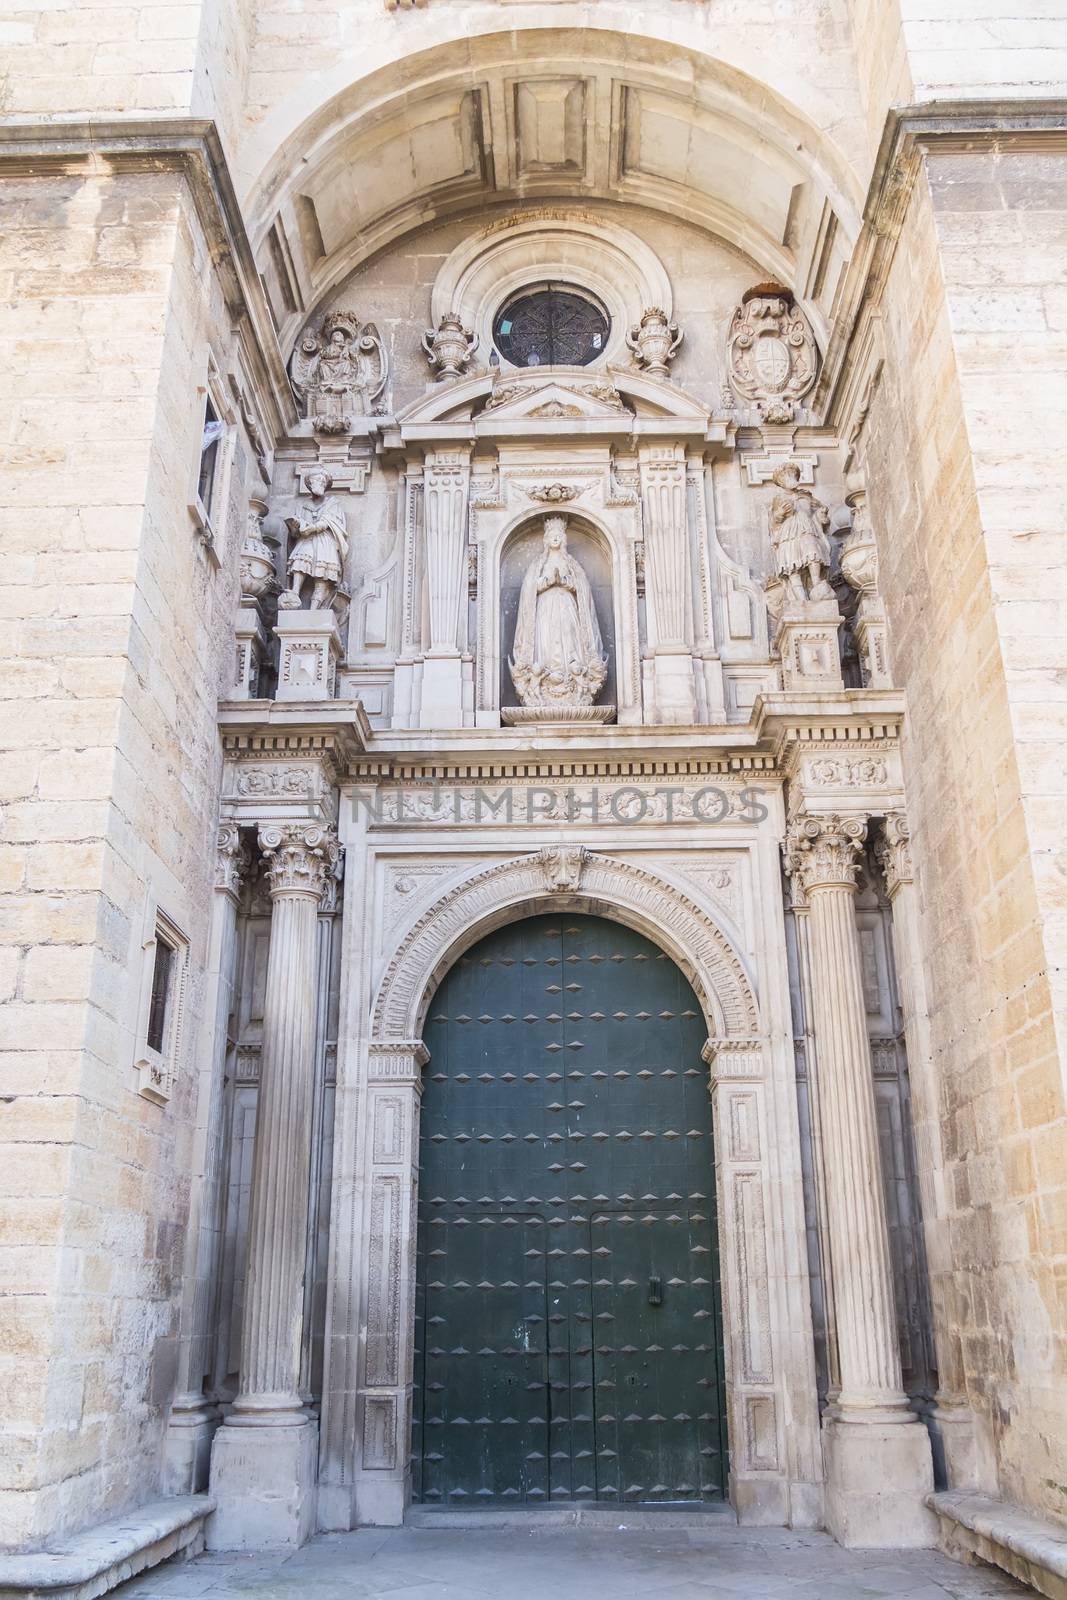 Jaen Assumption catheral frontal facade entrance, Spain by max8xam